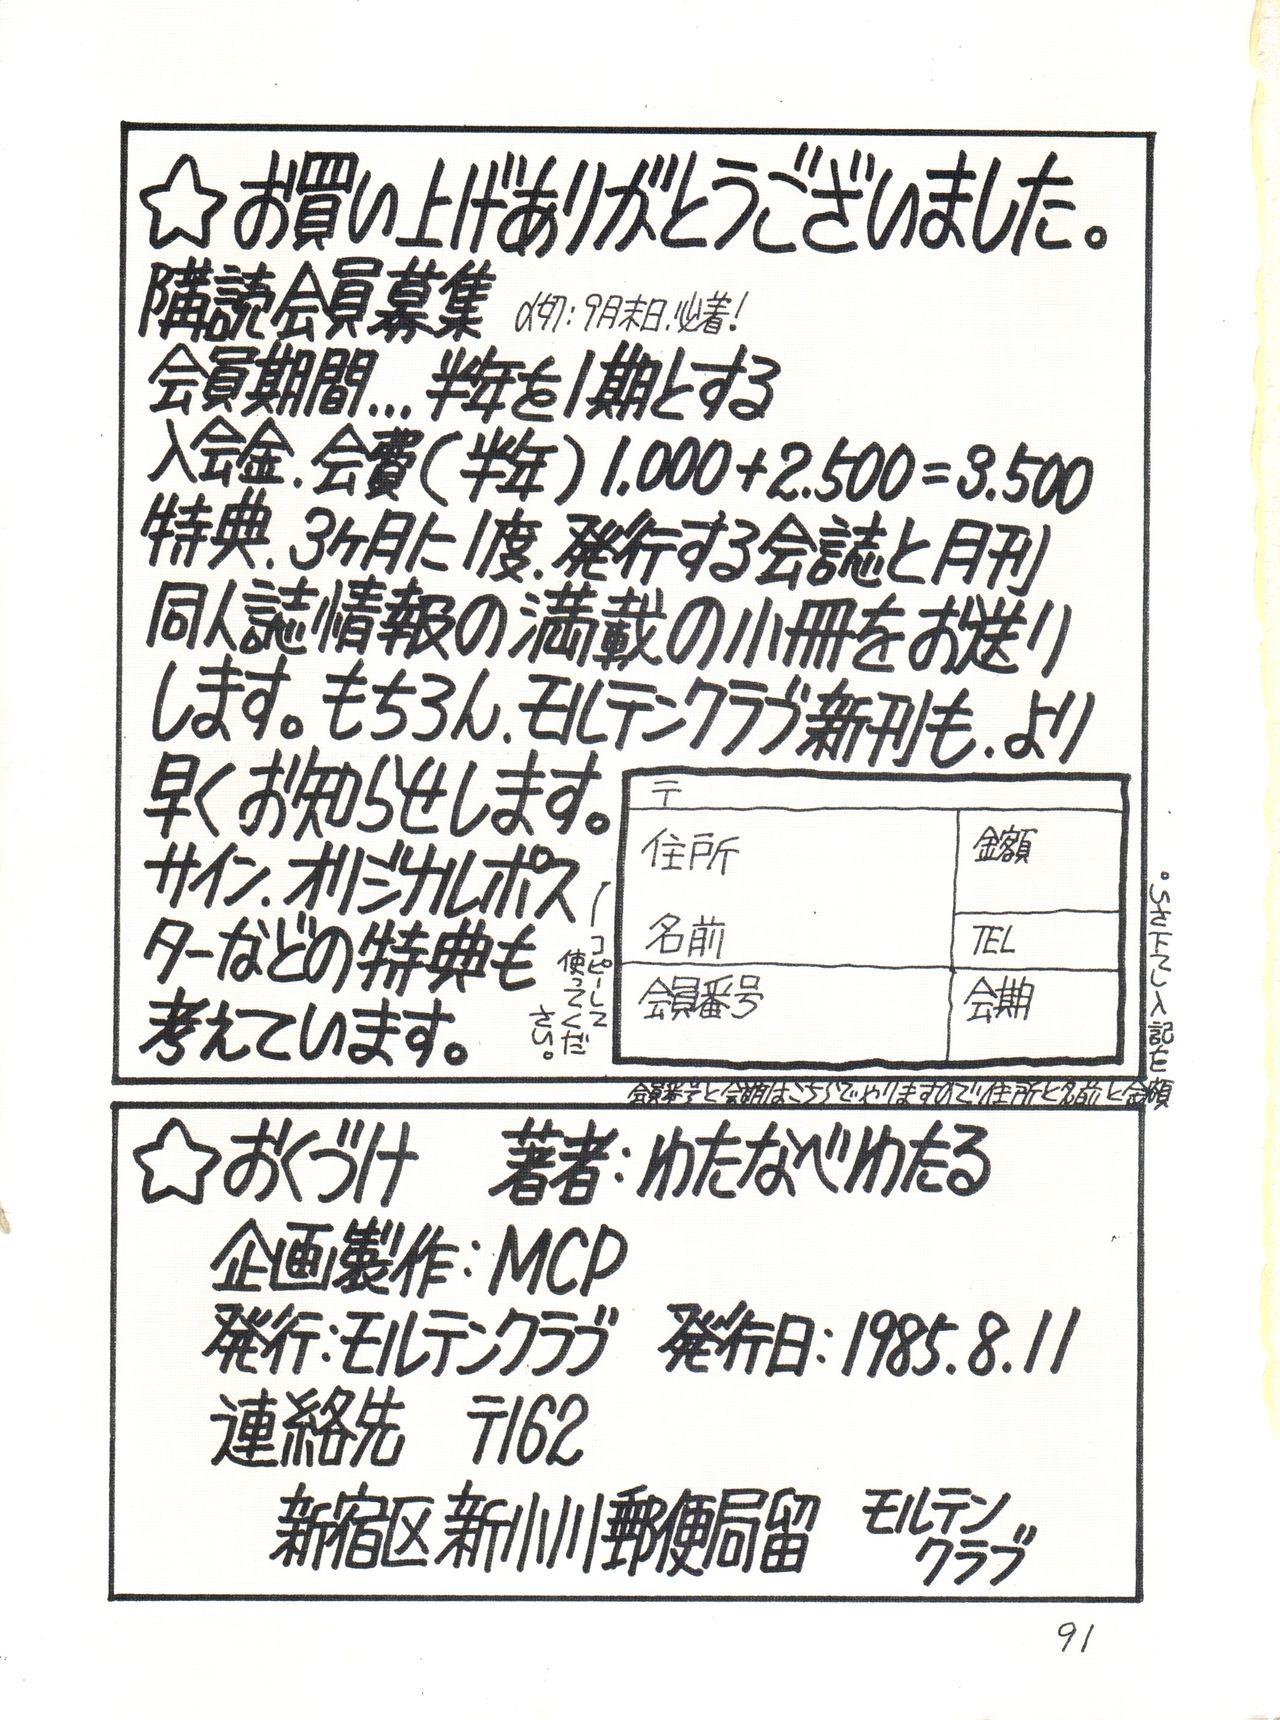 Skirt Gyakuten Juppatsuman - Urusei yatsura Creamy mami Hardcore - Page 91